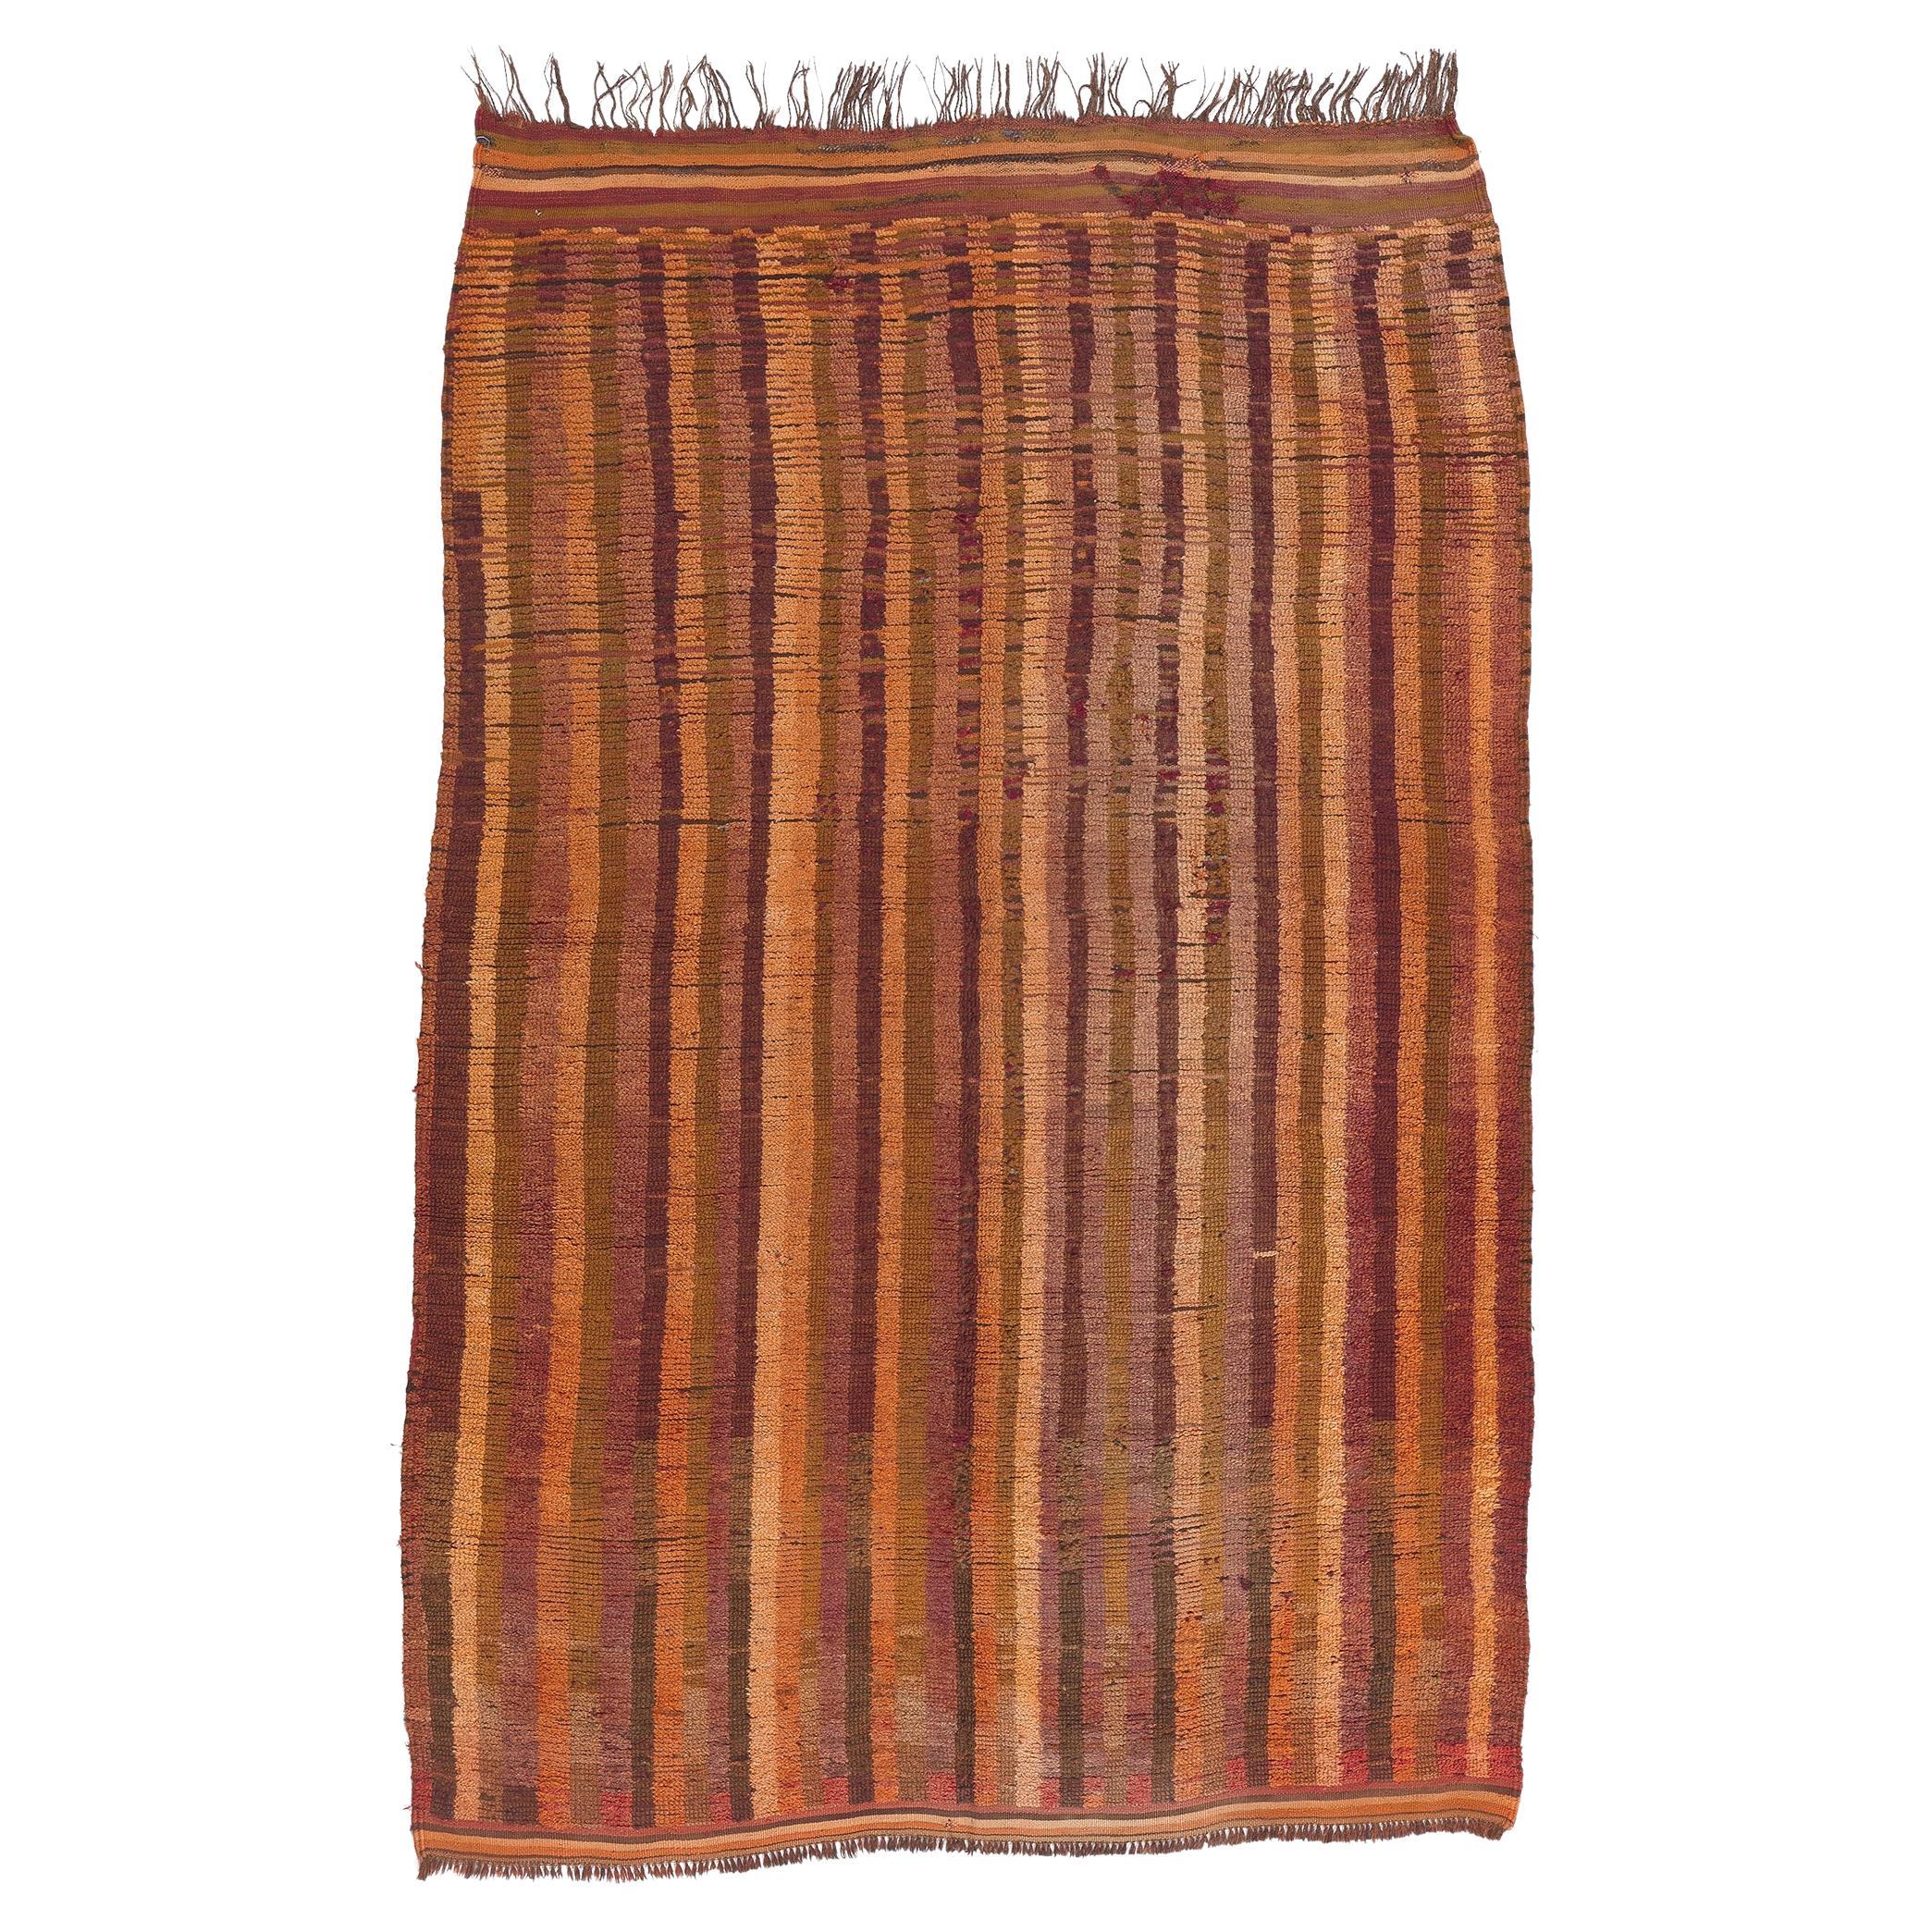 Vintage Striped Talsint Moroccan Rug, Midcentury Modern Meets Cozy Bohemian